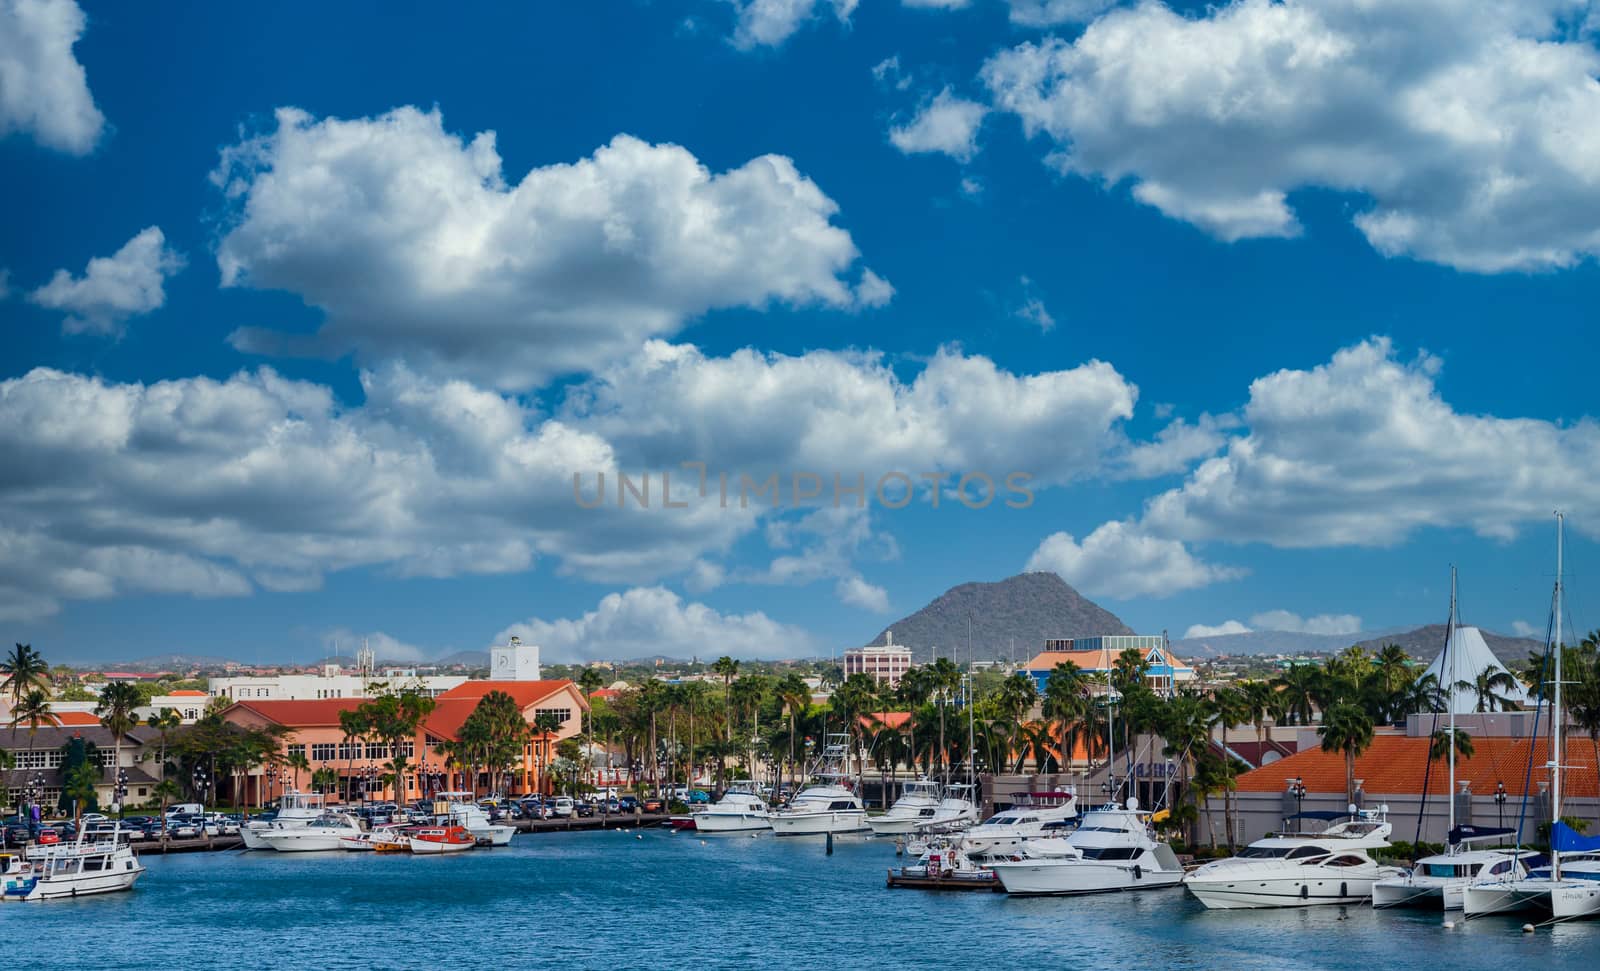 Yacht Basin on Aruba Harbor by dbvirago